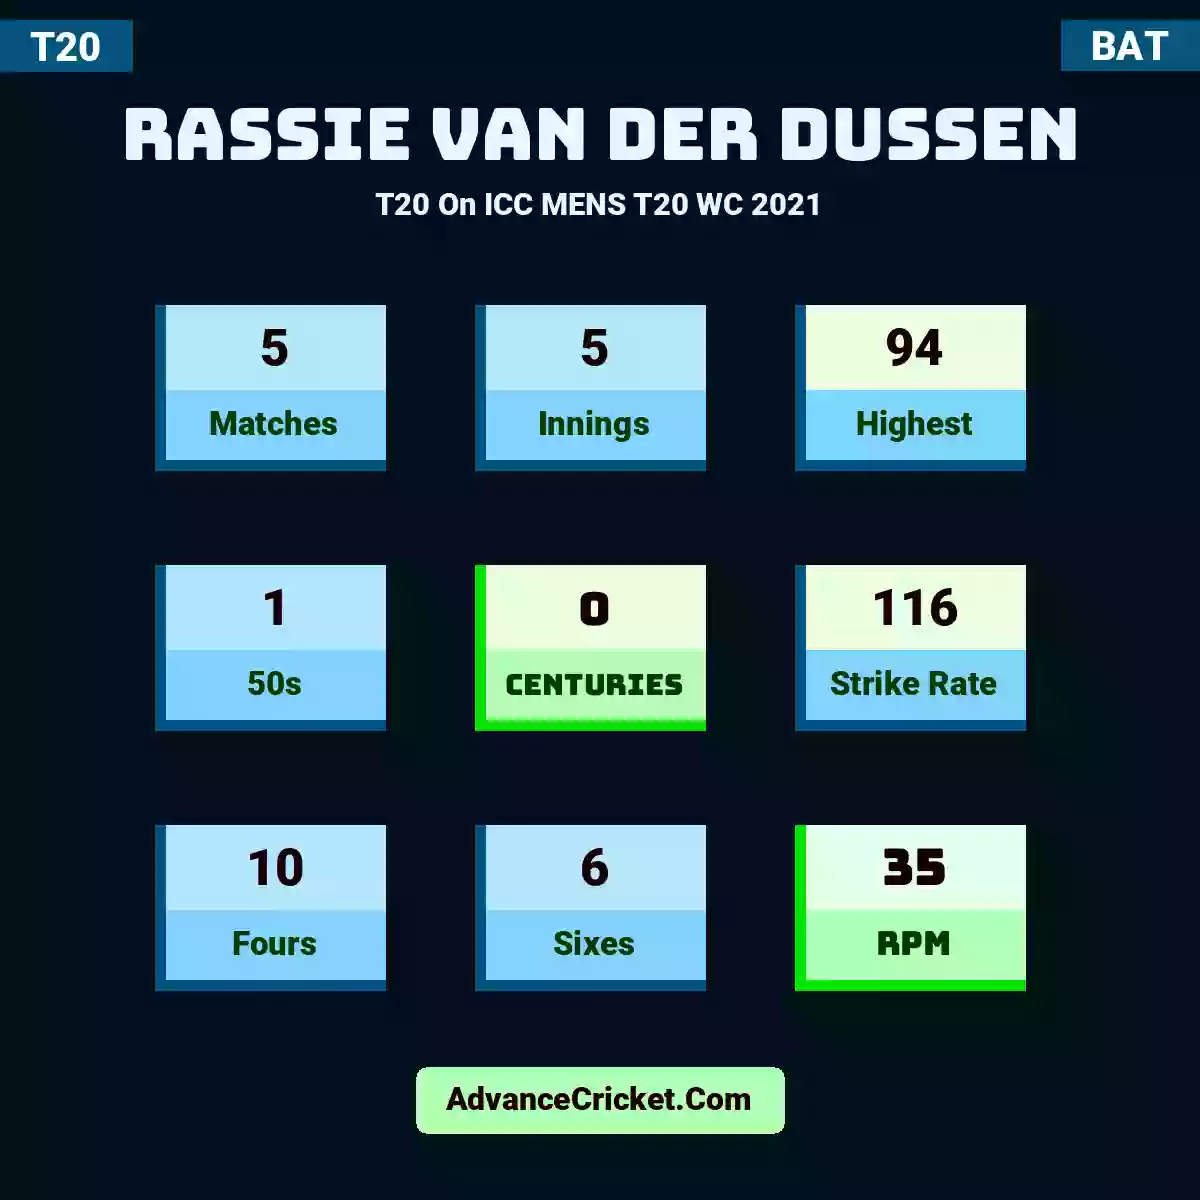 Rassie van der Dussen T20  On ICC MENS T20 WC 2021, Rassie van der Dussen played 5 matches, scored 94 runs as highest, 1 half-centuries, and 0 centuries, with a strike rate of 116. R.Dussen hit 10 fours and 6 sixes, with an RPM of 35.